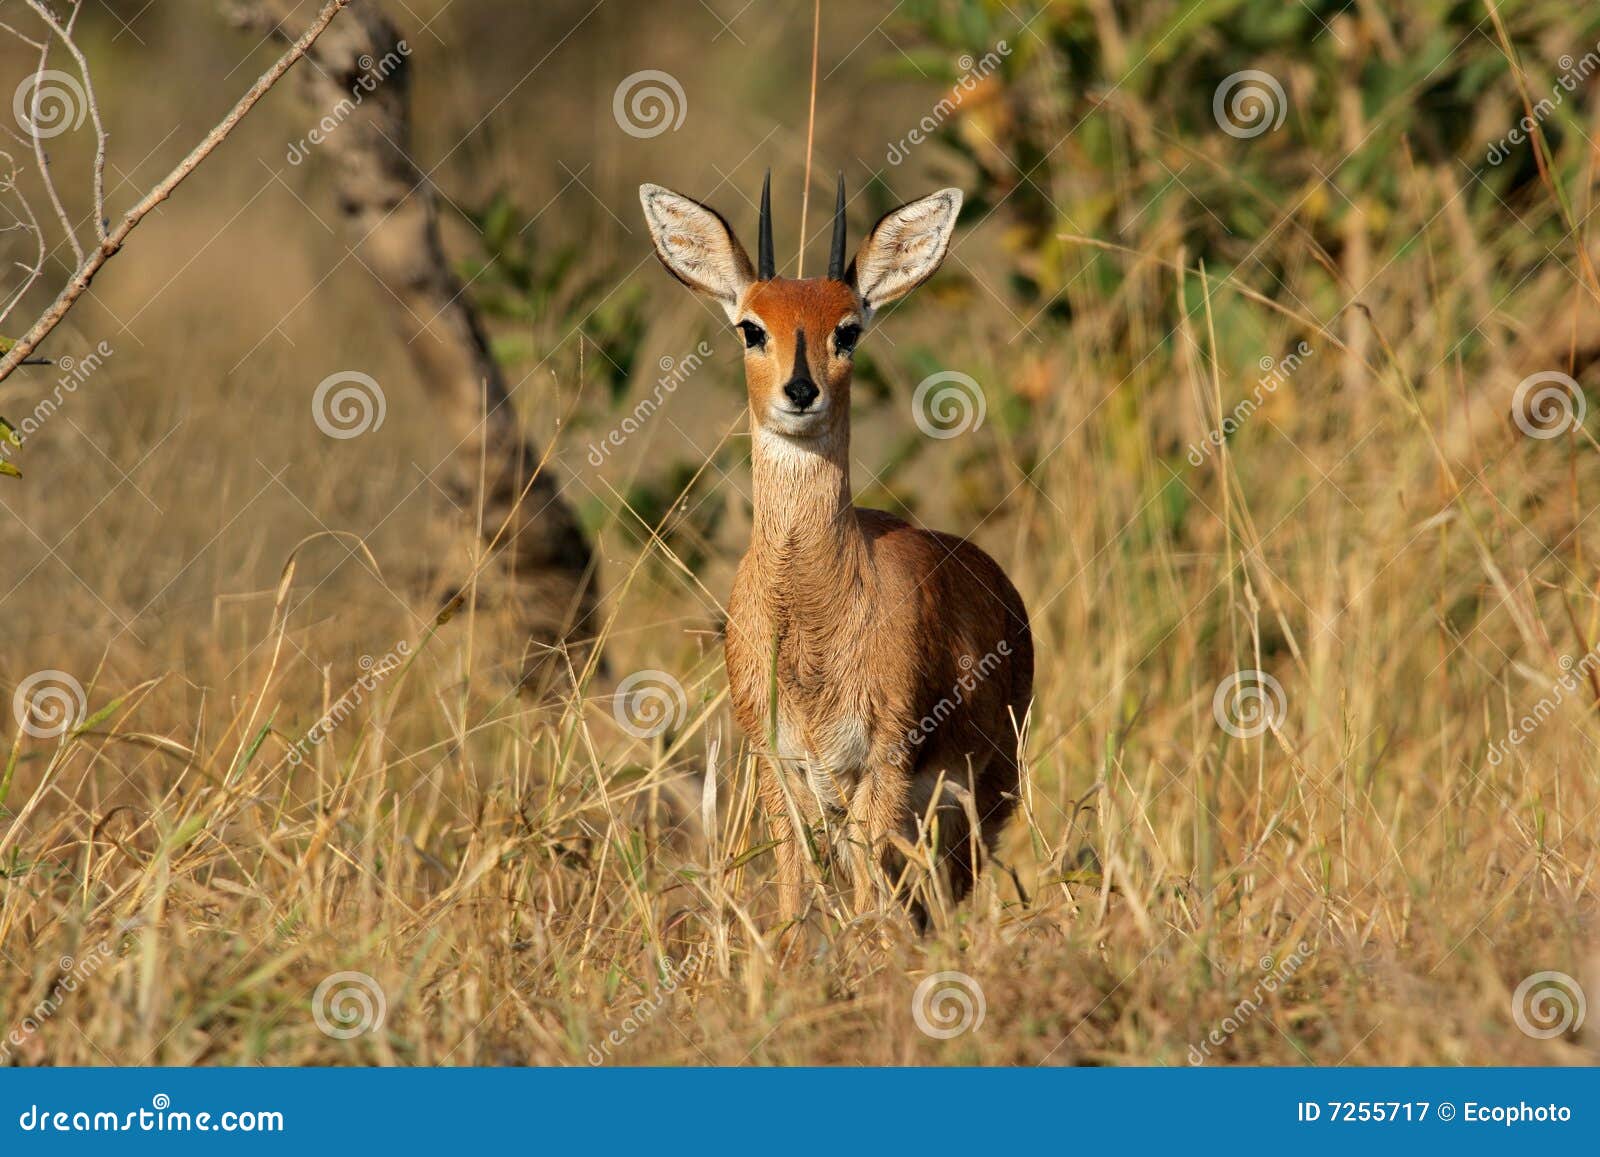 steenbok antelope